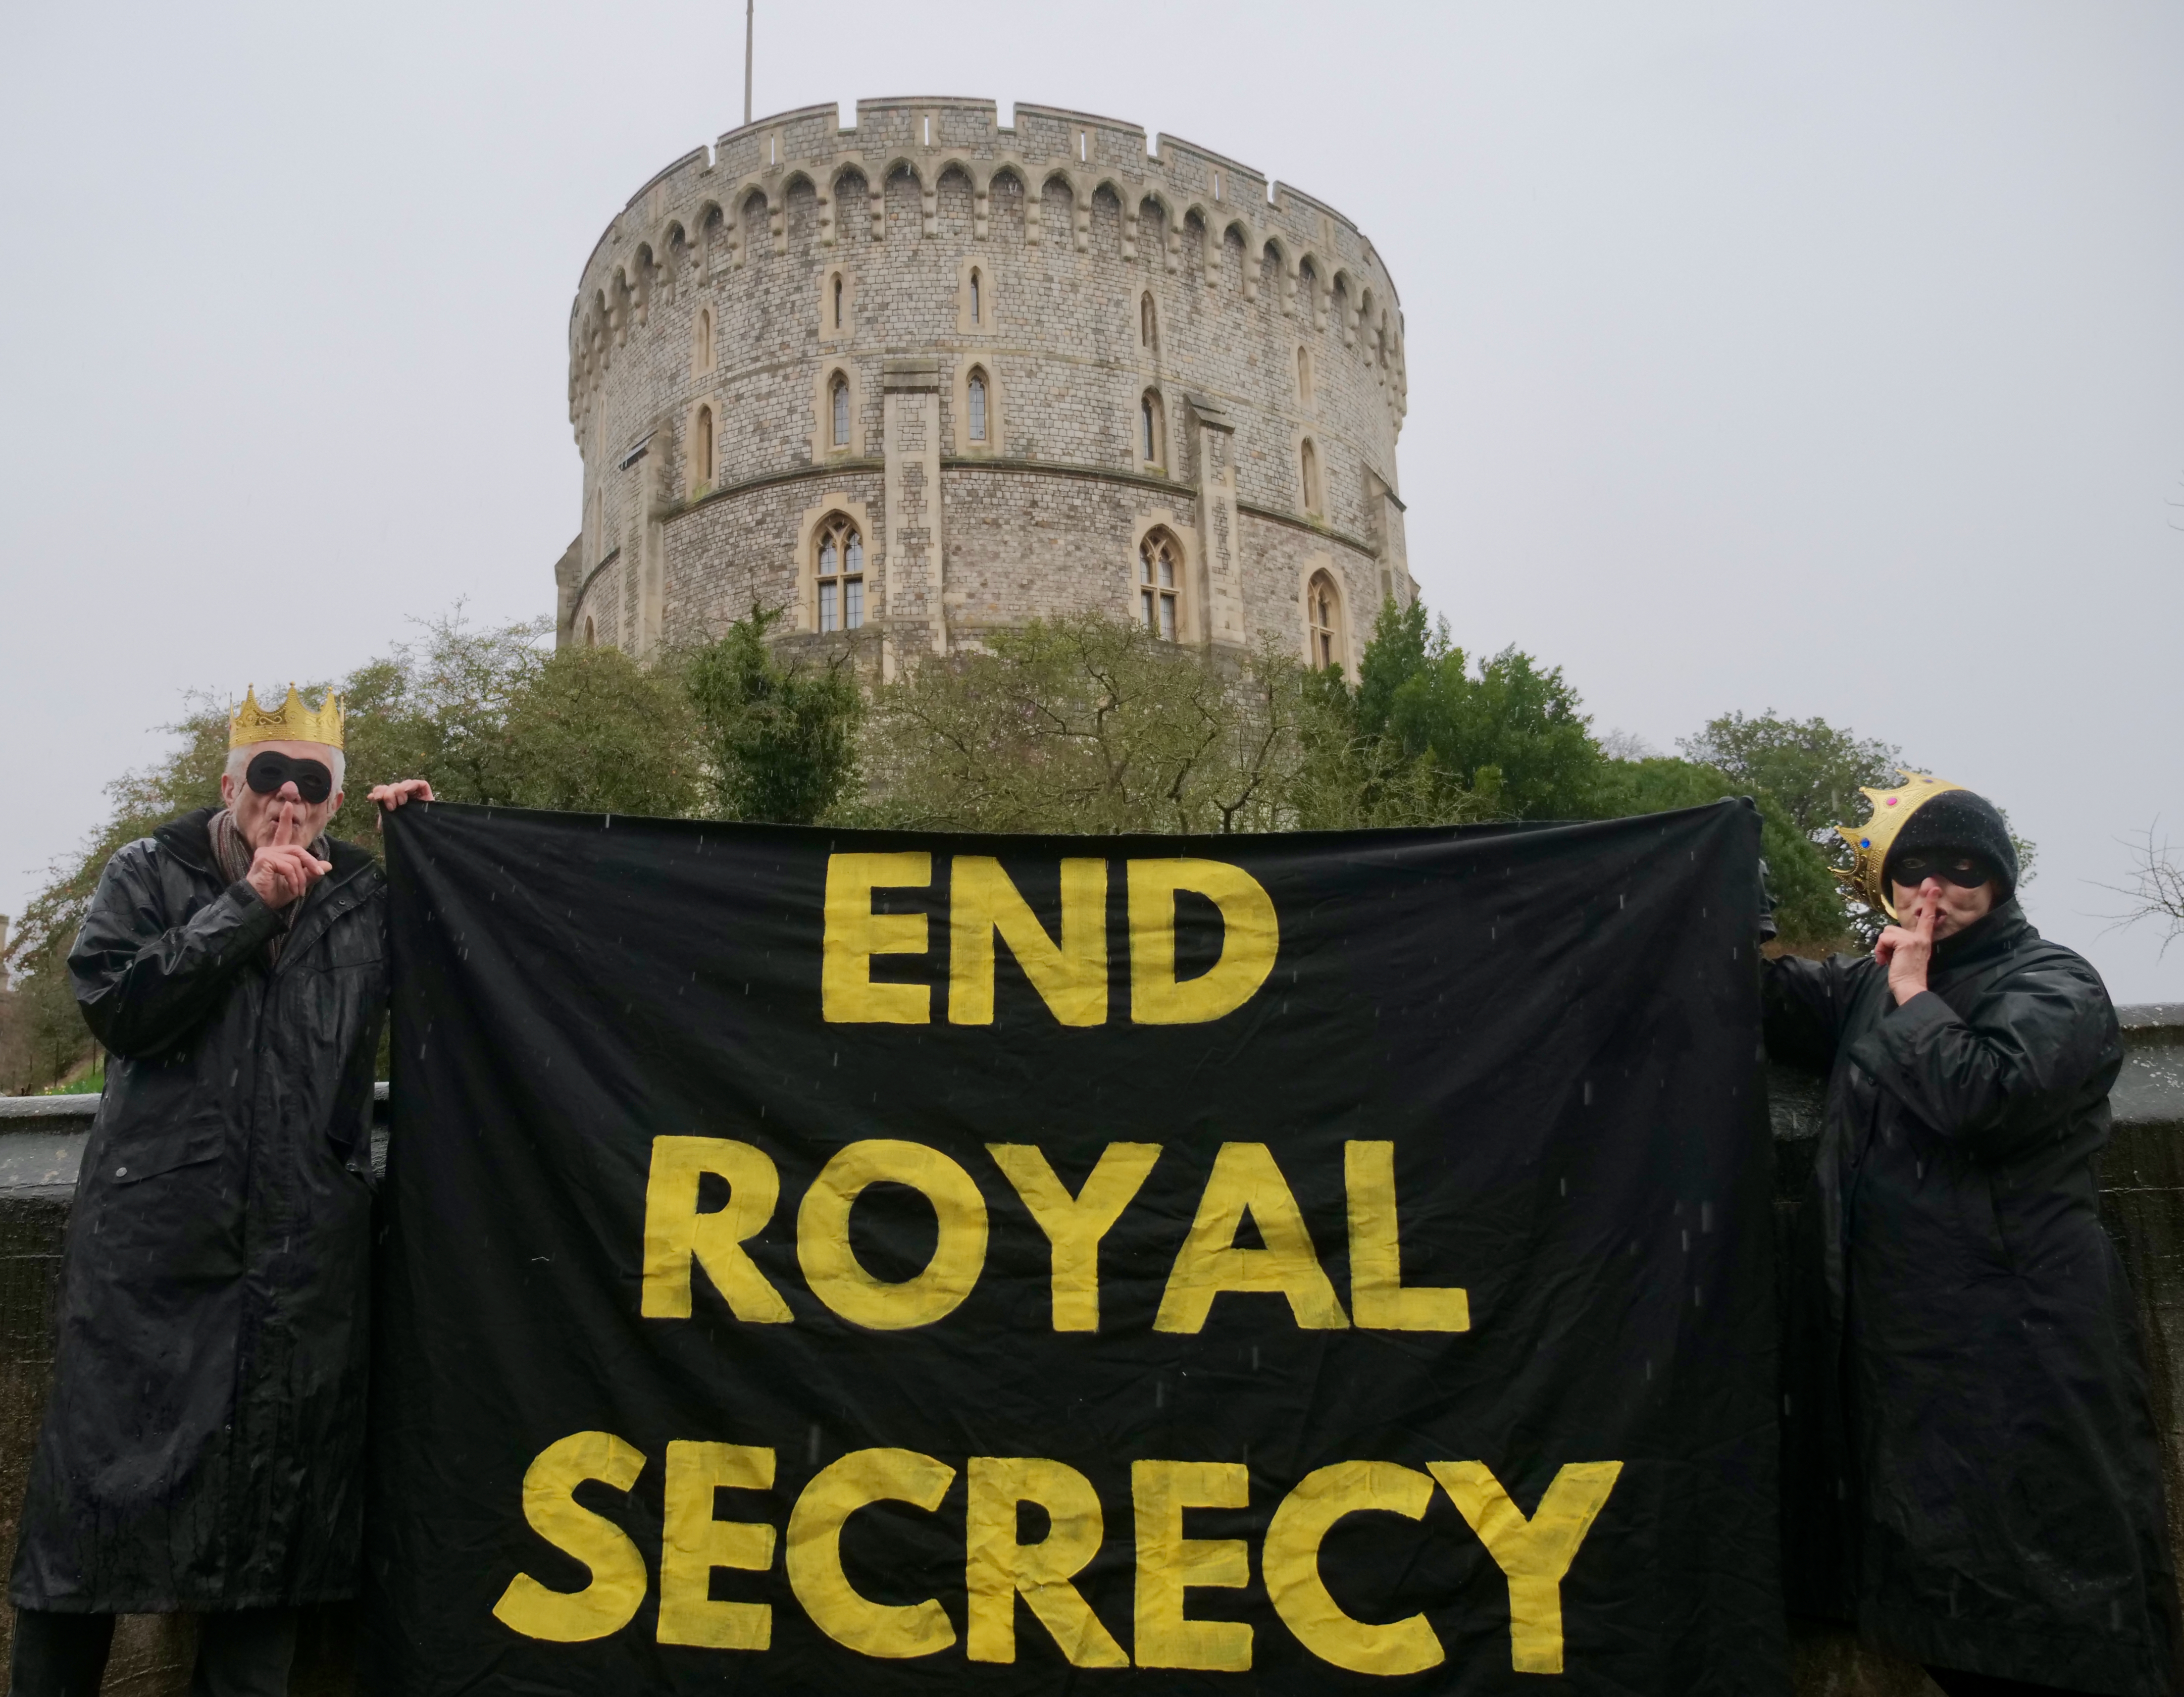 Republic's protest at Windsor over royal secrec